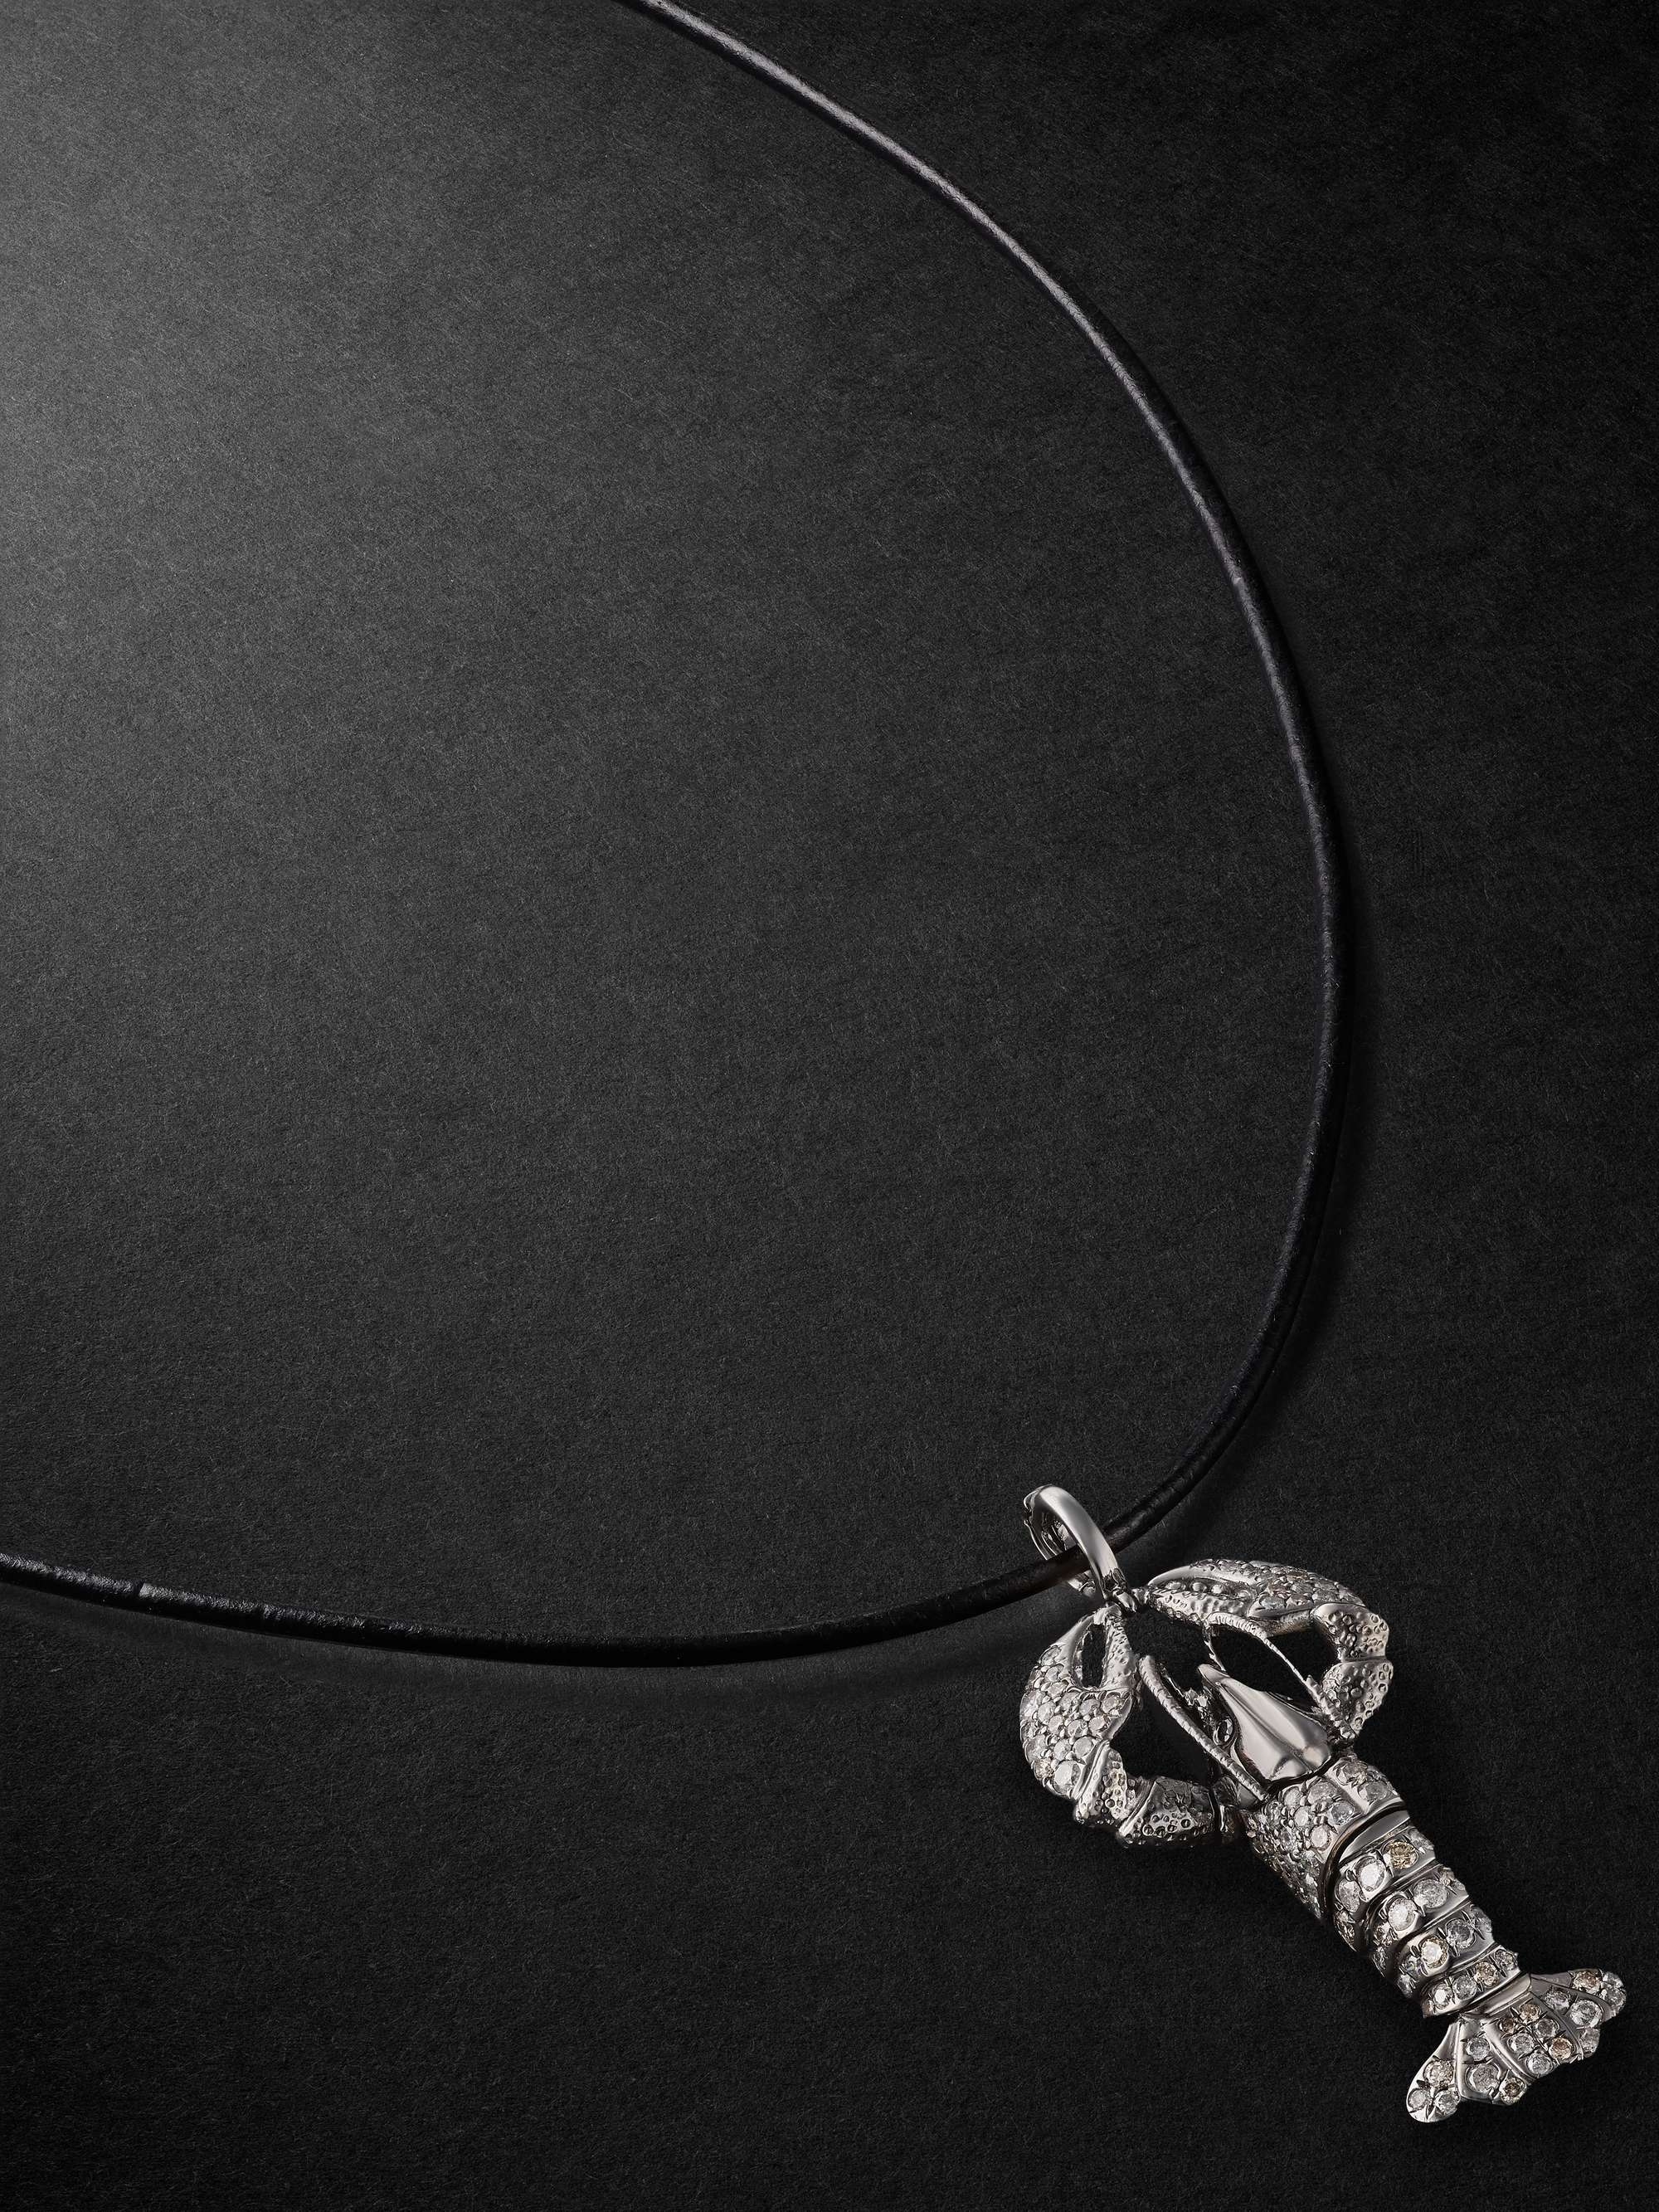 ANNOUSHKA Lobster Locket 18-Karat Blackened White Gold, Diamond and Leather Pendant Necklace